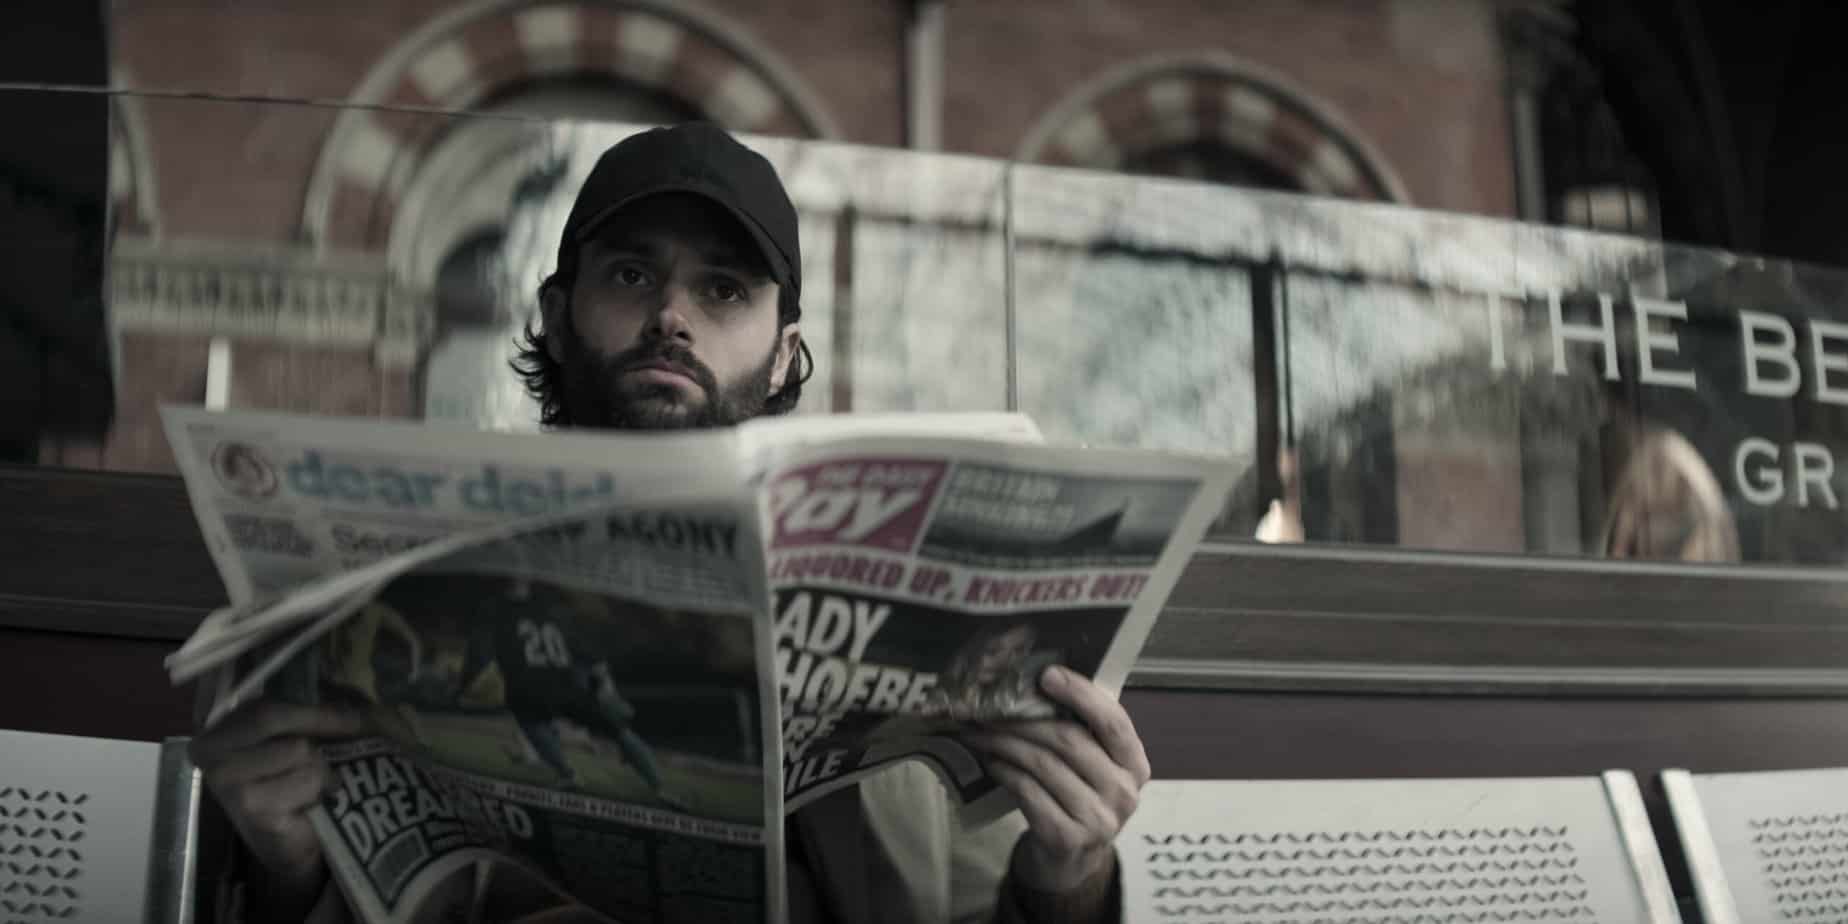 Ypu season 4 quotes from Joe. Joe looking over a newspaper, wearing a baseball cap and a full beard.